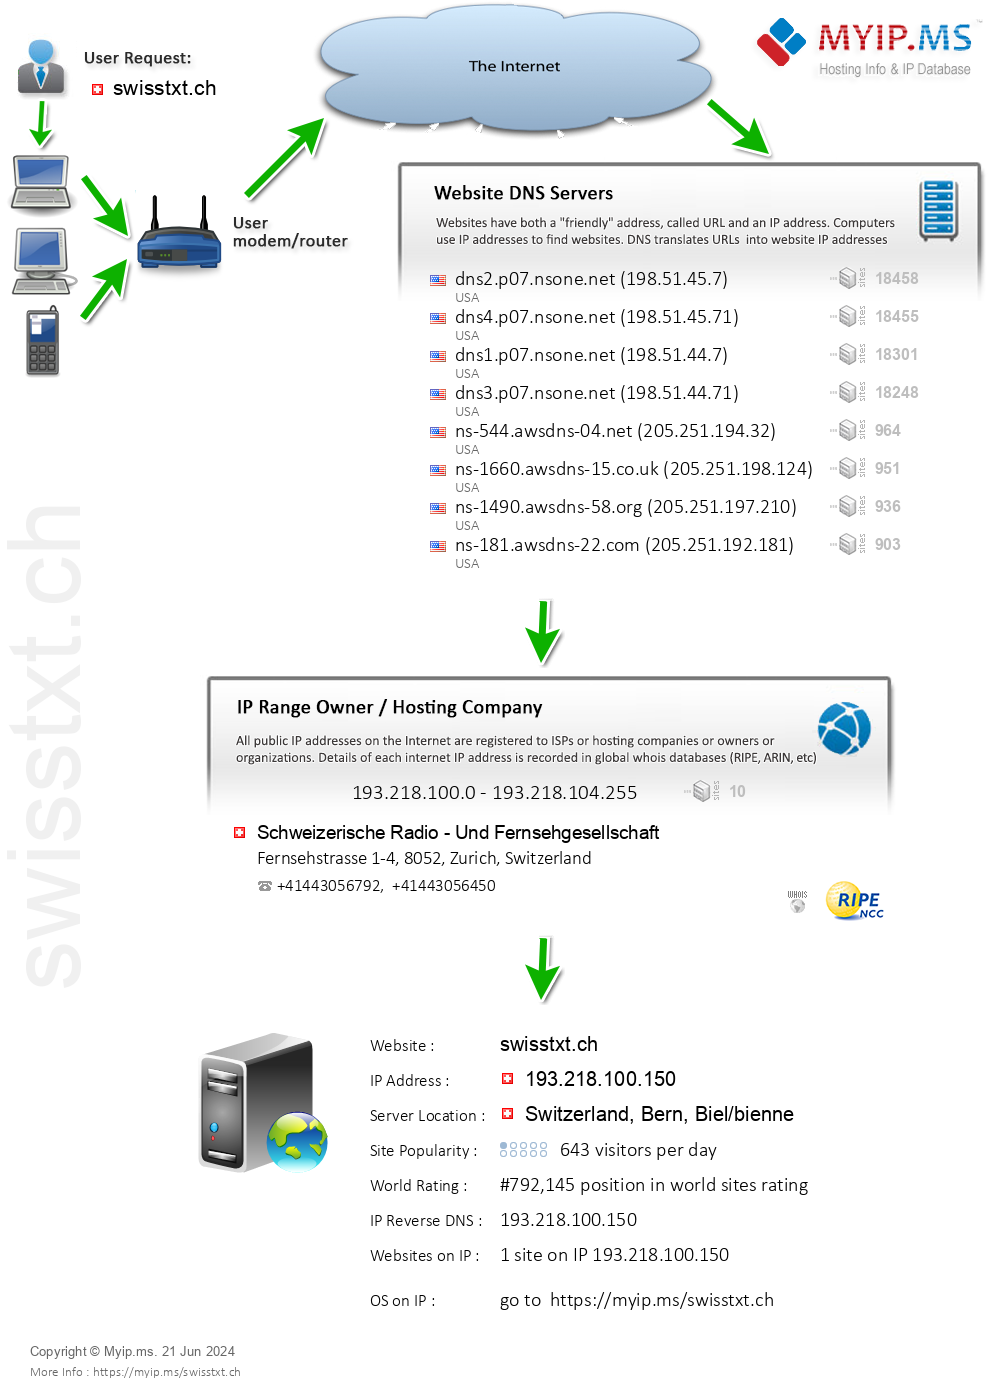 Swisstxt.ch - Website Hosting Visual IP Diagram